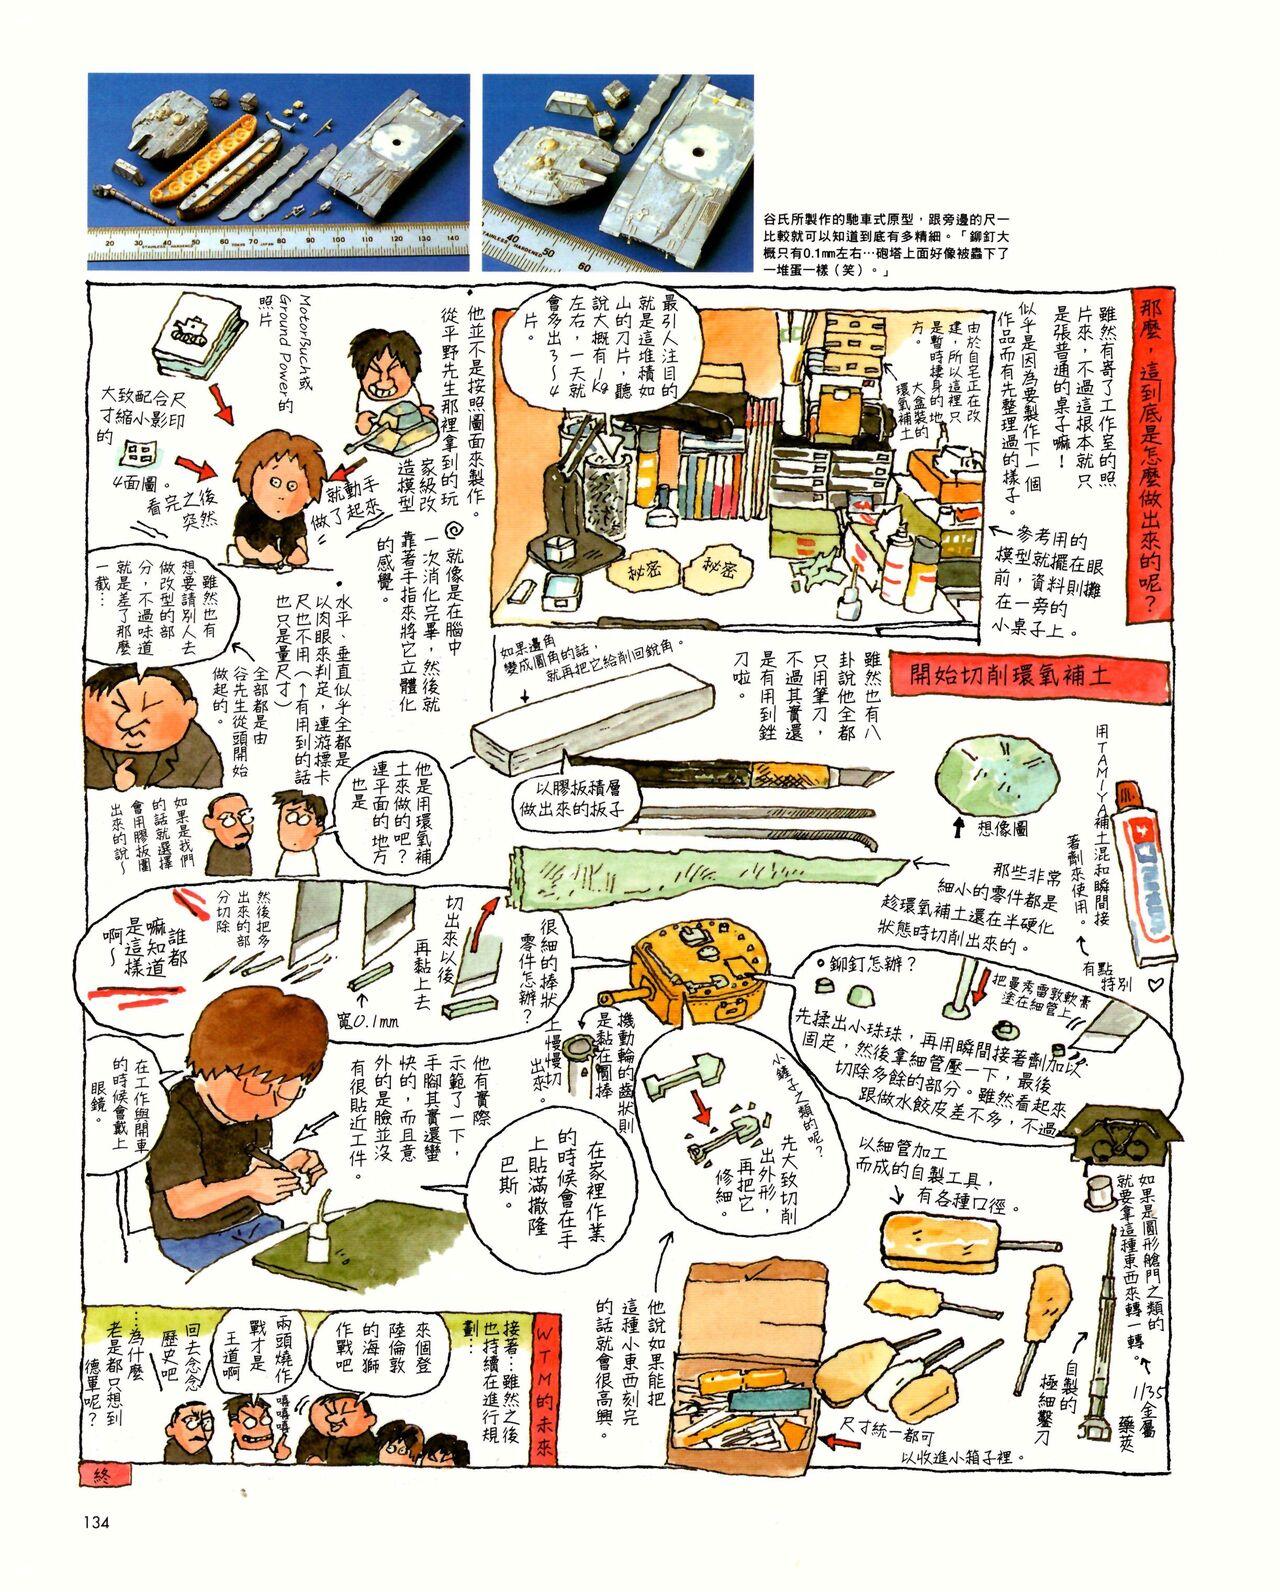 世界戰車博物館圖鑑(2009台版)  PANZERTALES WORLD TANK MUSEUM illustrated (chinese) 133